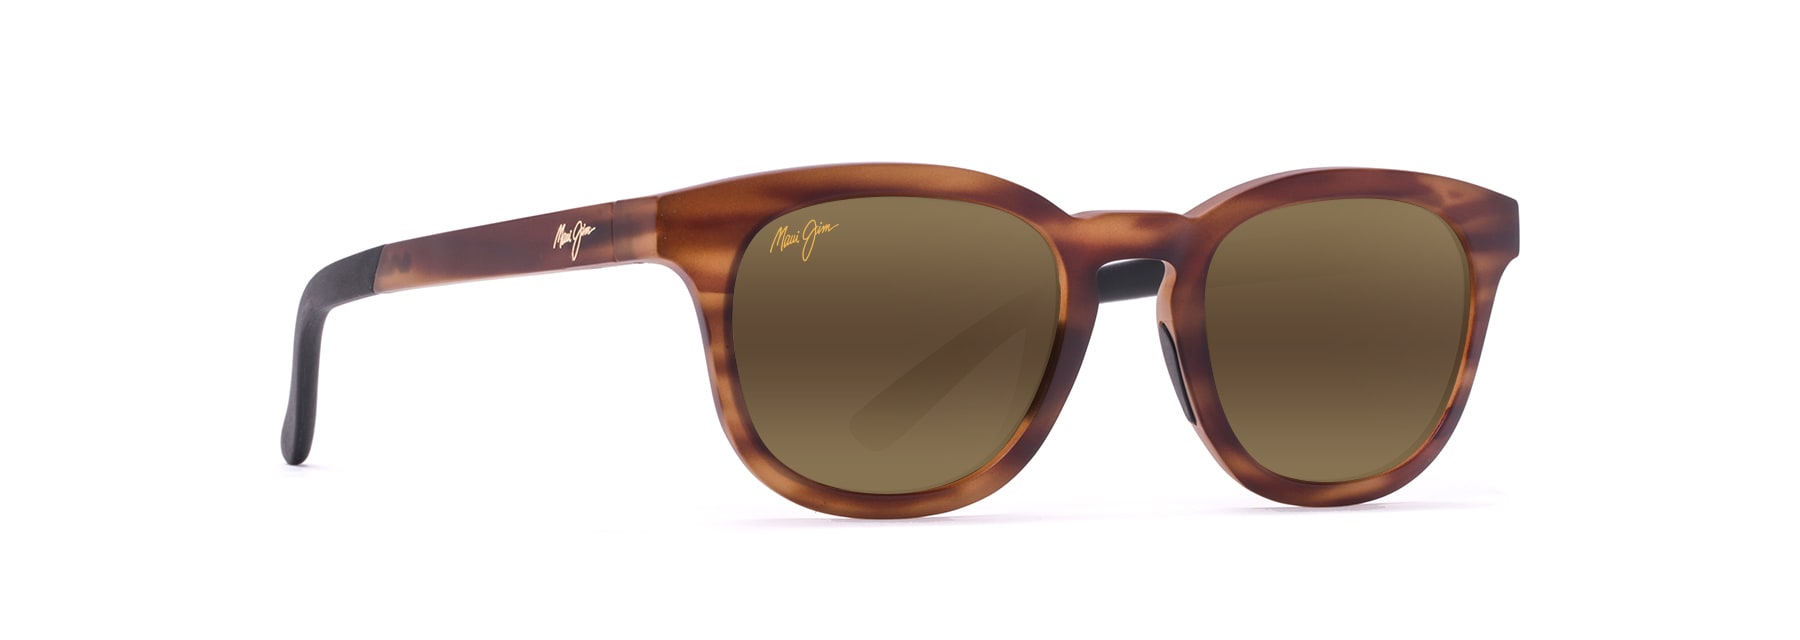 Koko Head Polarized Sunglasses | Maui Jim®